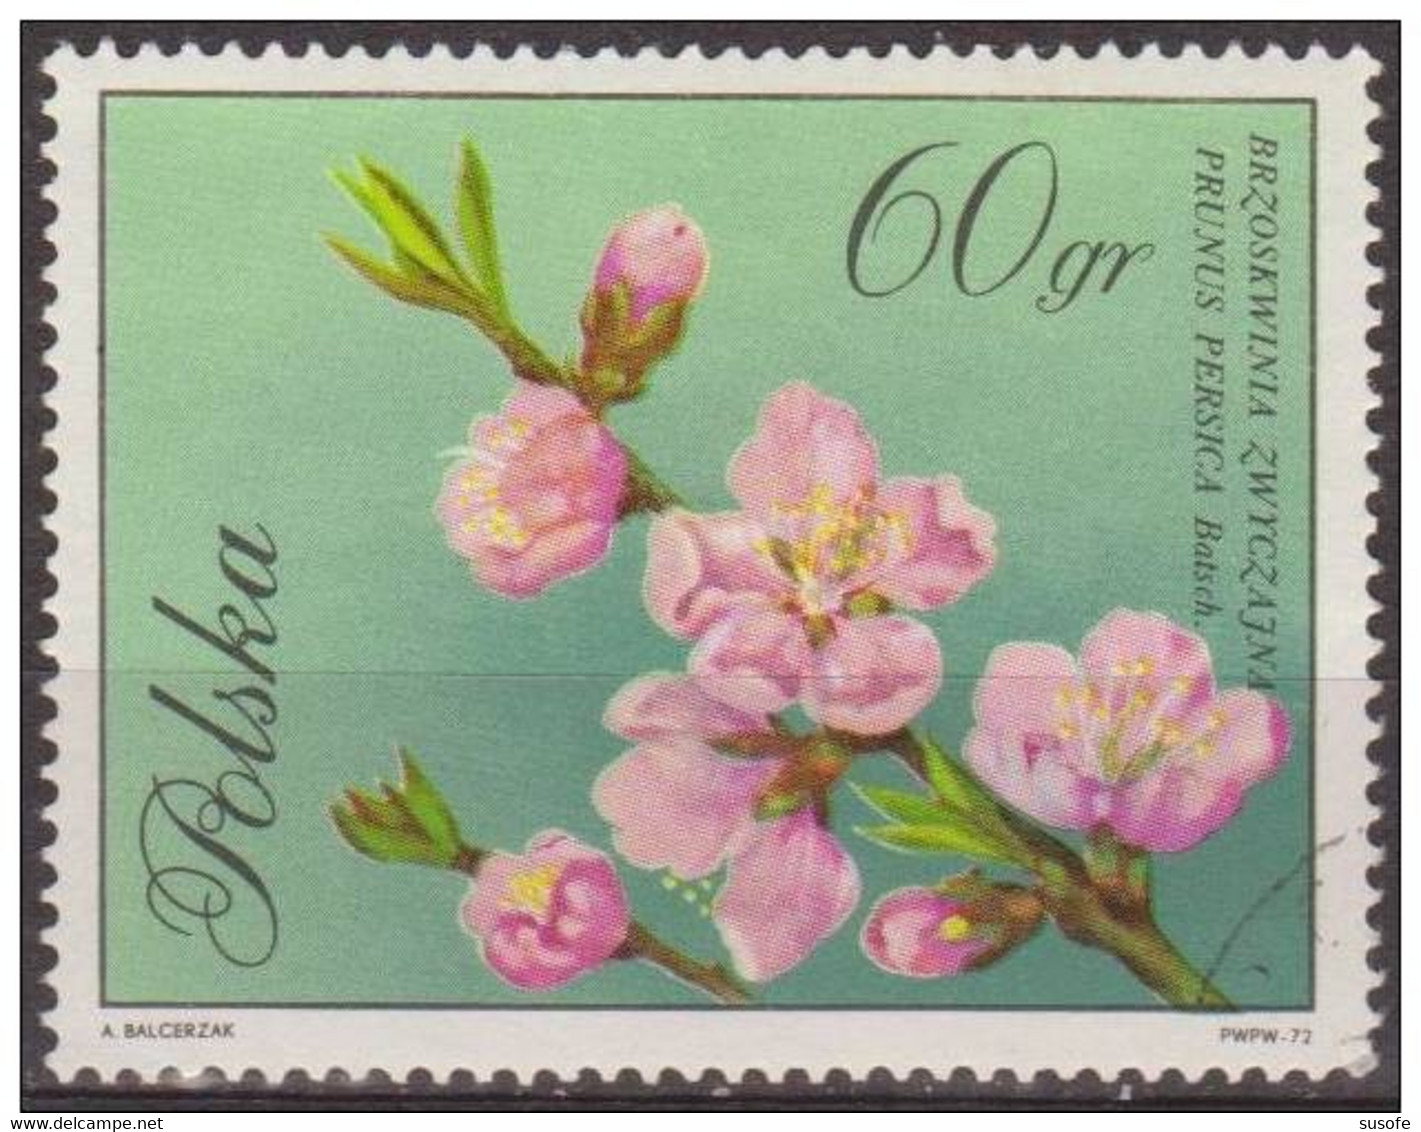 Polonia 1971 Scott 1863 Sello * Flora Flor Melocoton Prunus Persica Michel 2135 Yvert 1982 Polska Stamps Timbre Pologne - Nuevos